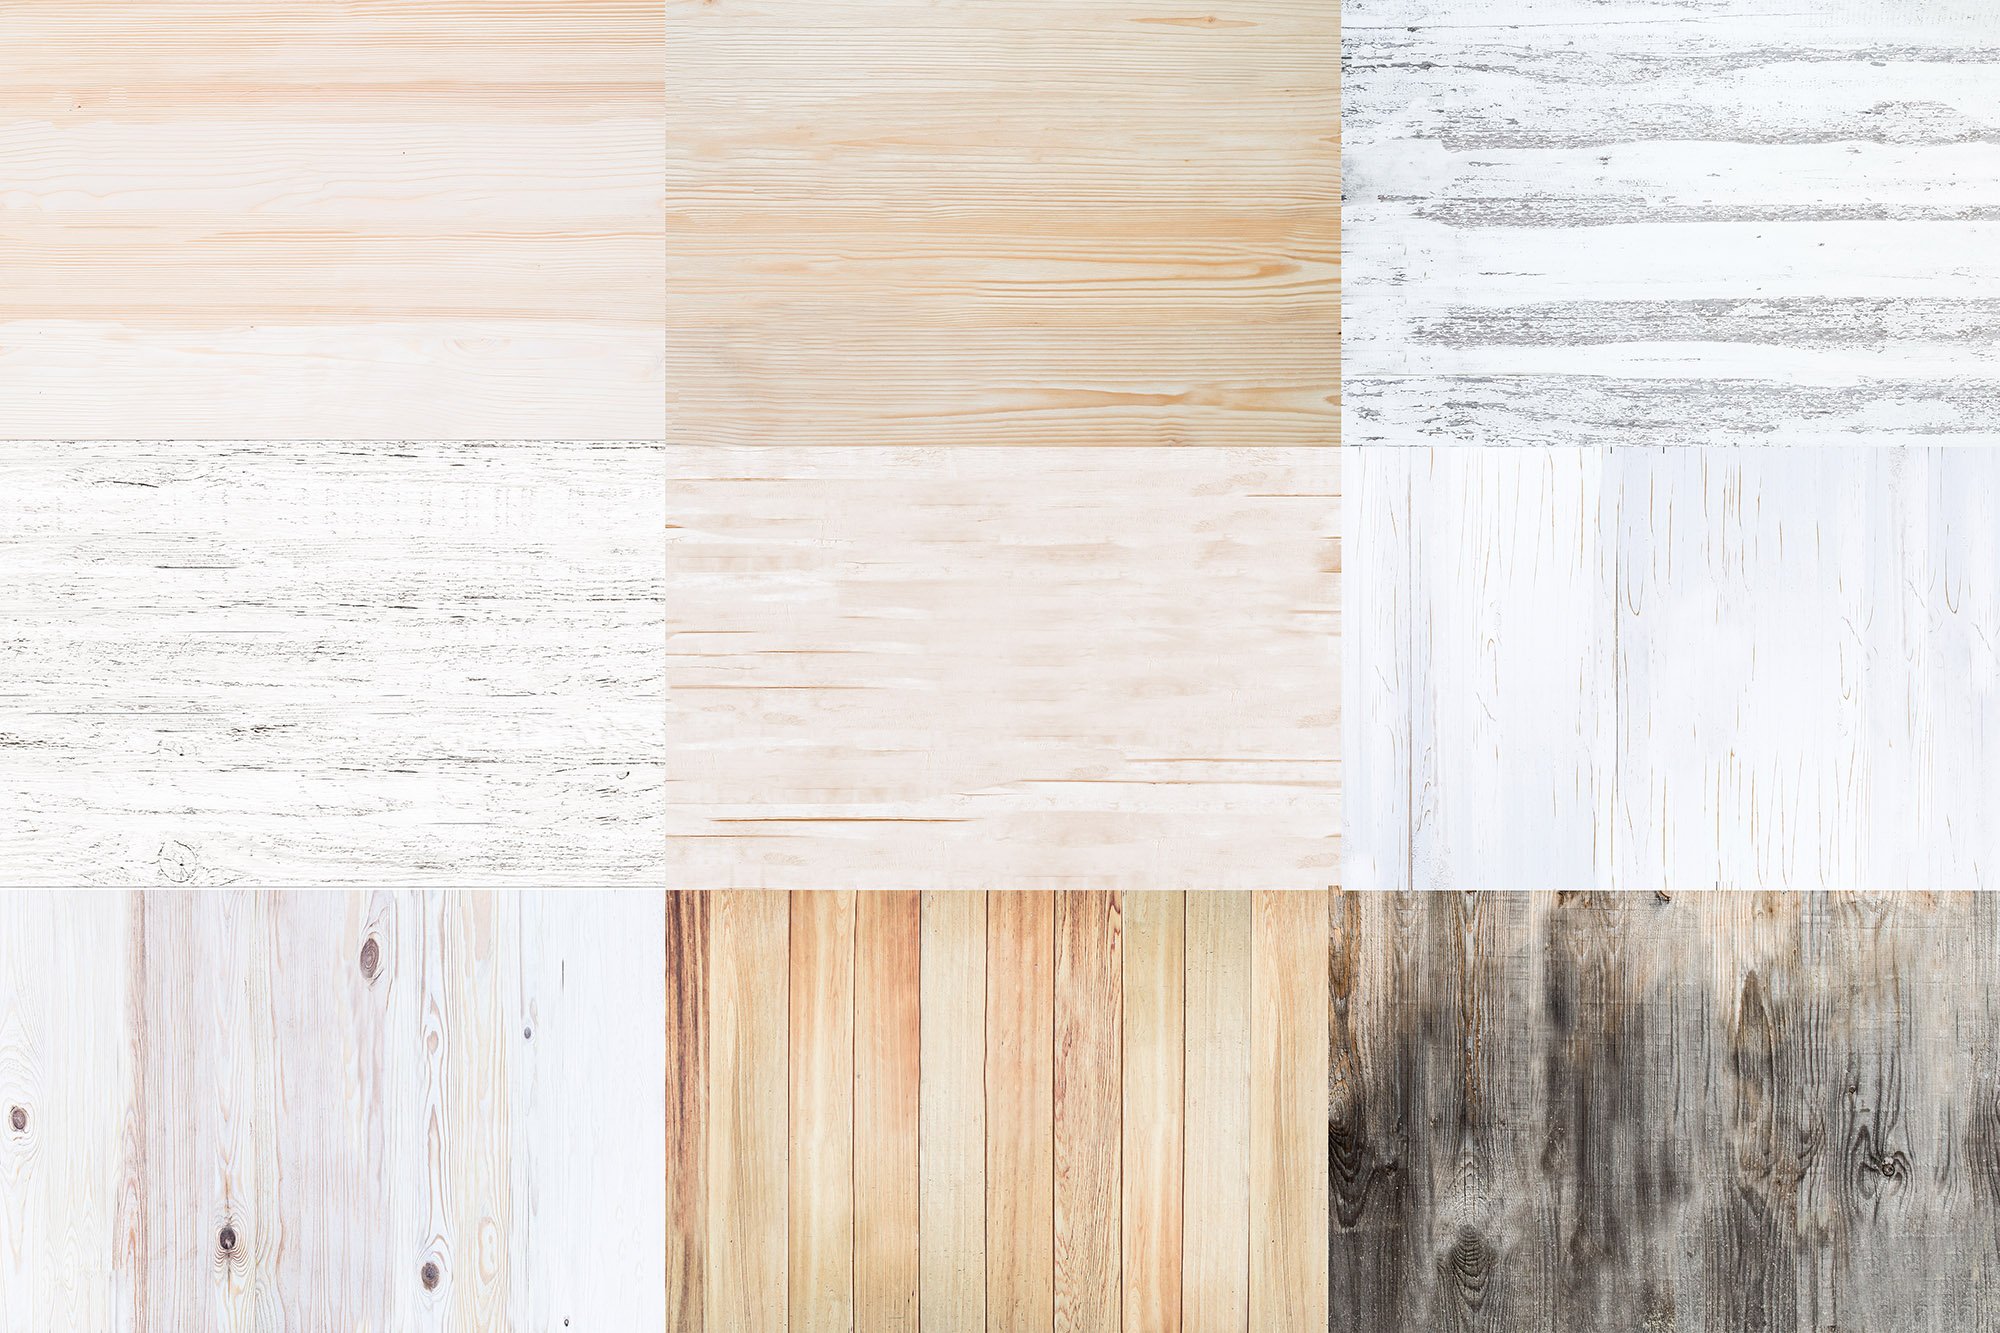 Rustic Wood Texture Digital Paper cover image.